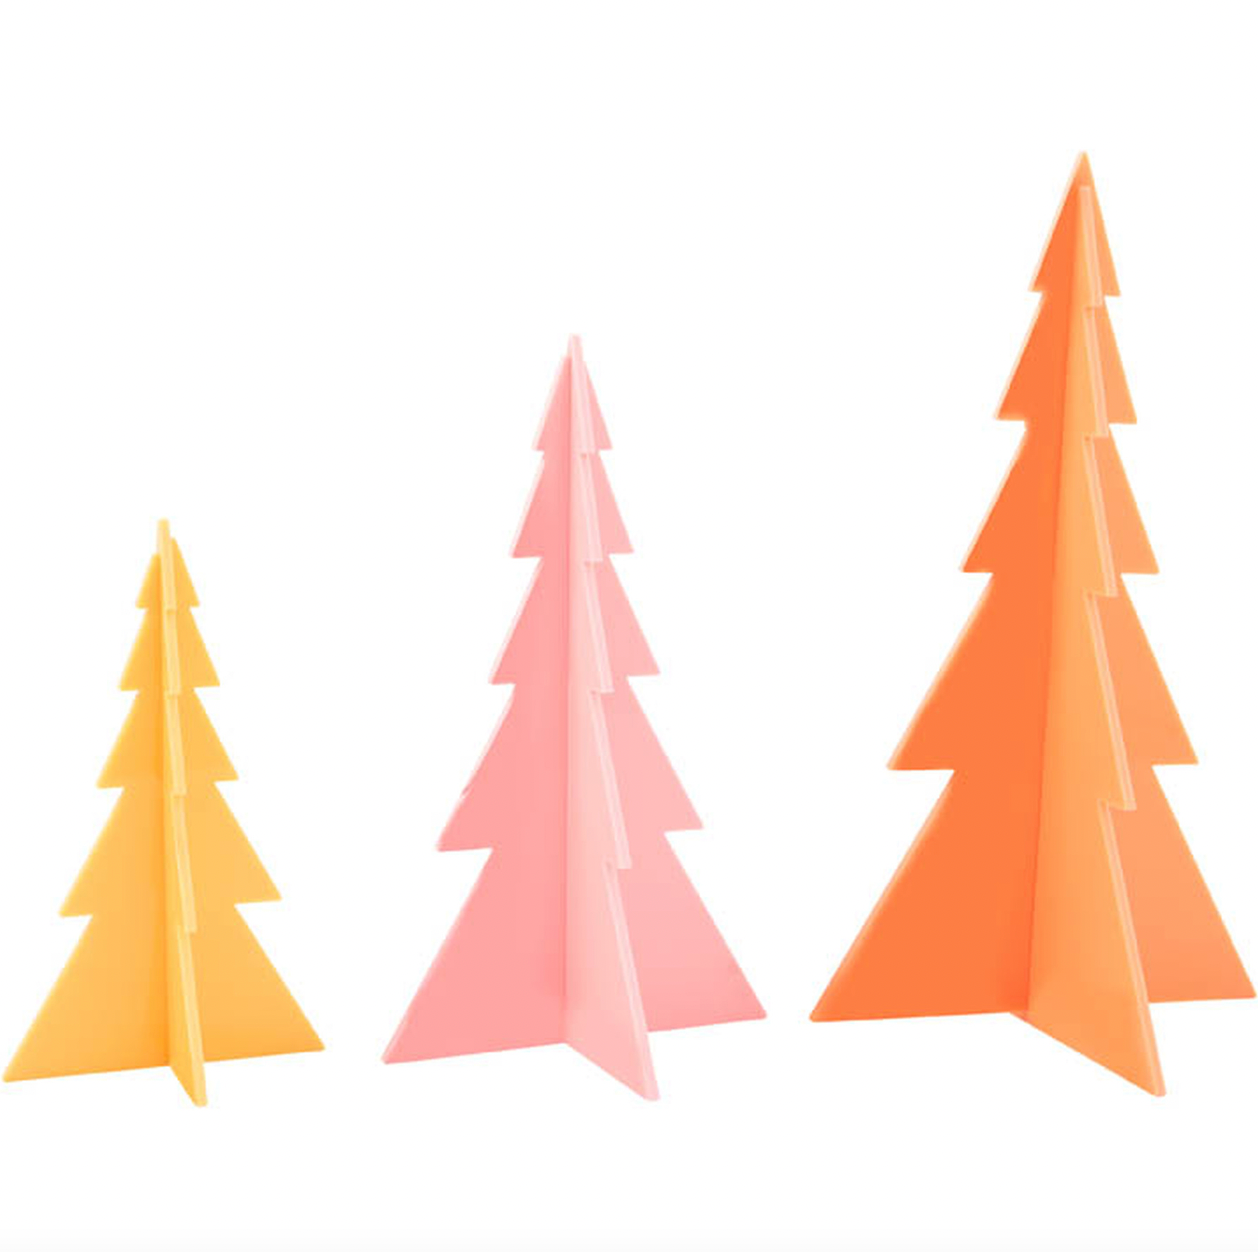 CR Gibson Kailo Chic Acrylic Christmas Trees Set of 3 - Coral, Tangerine, & Orange